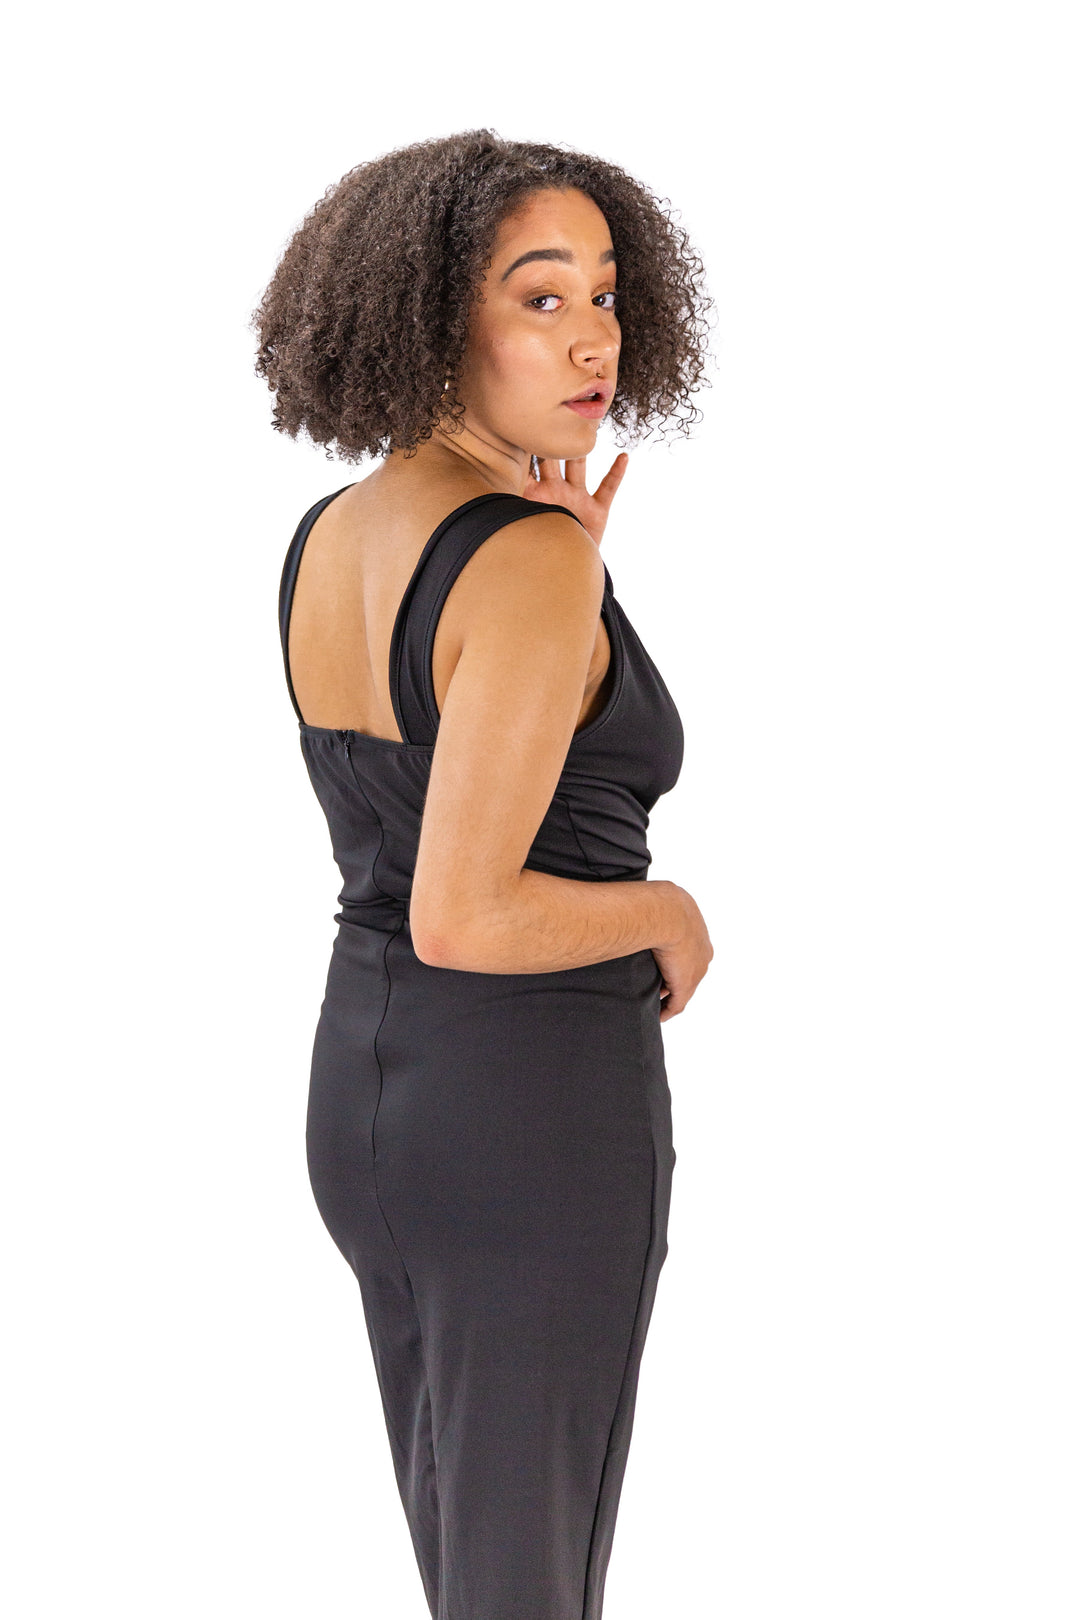 Slim-fit Sleek Affair Casual Black Dress